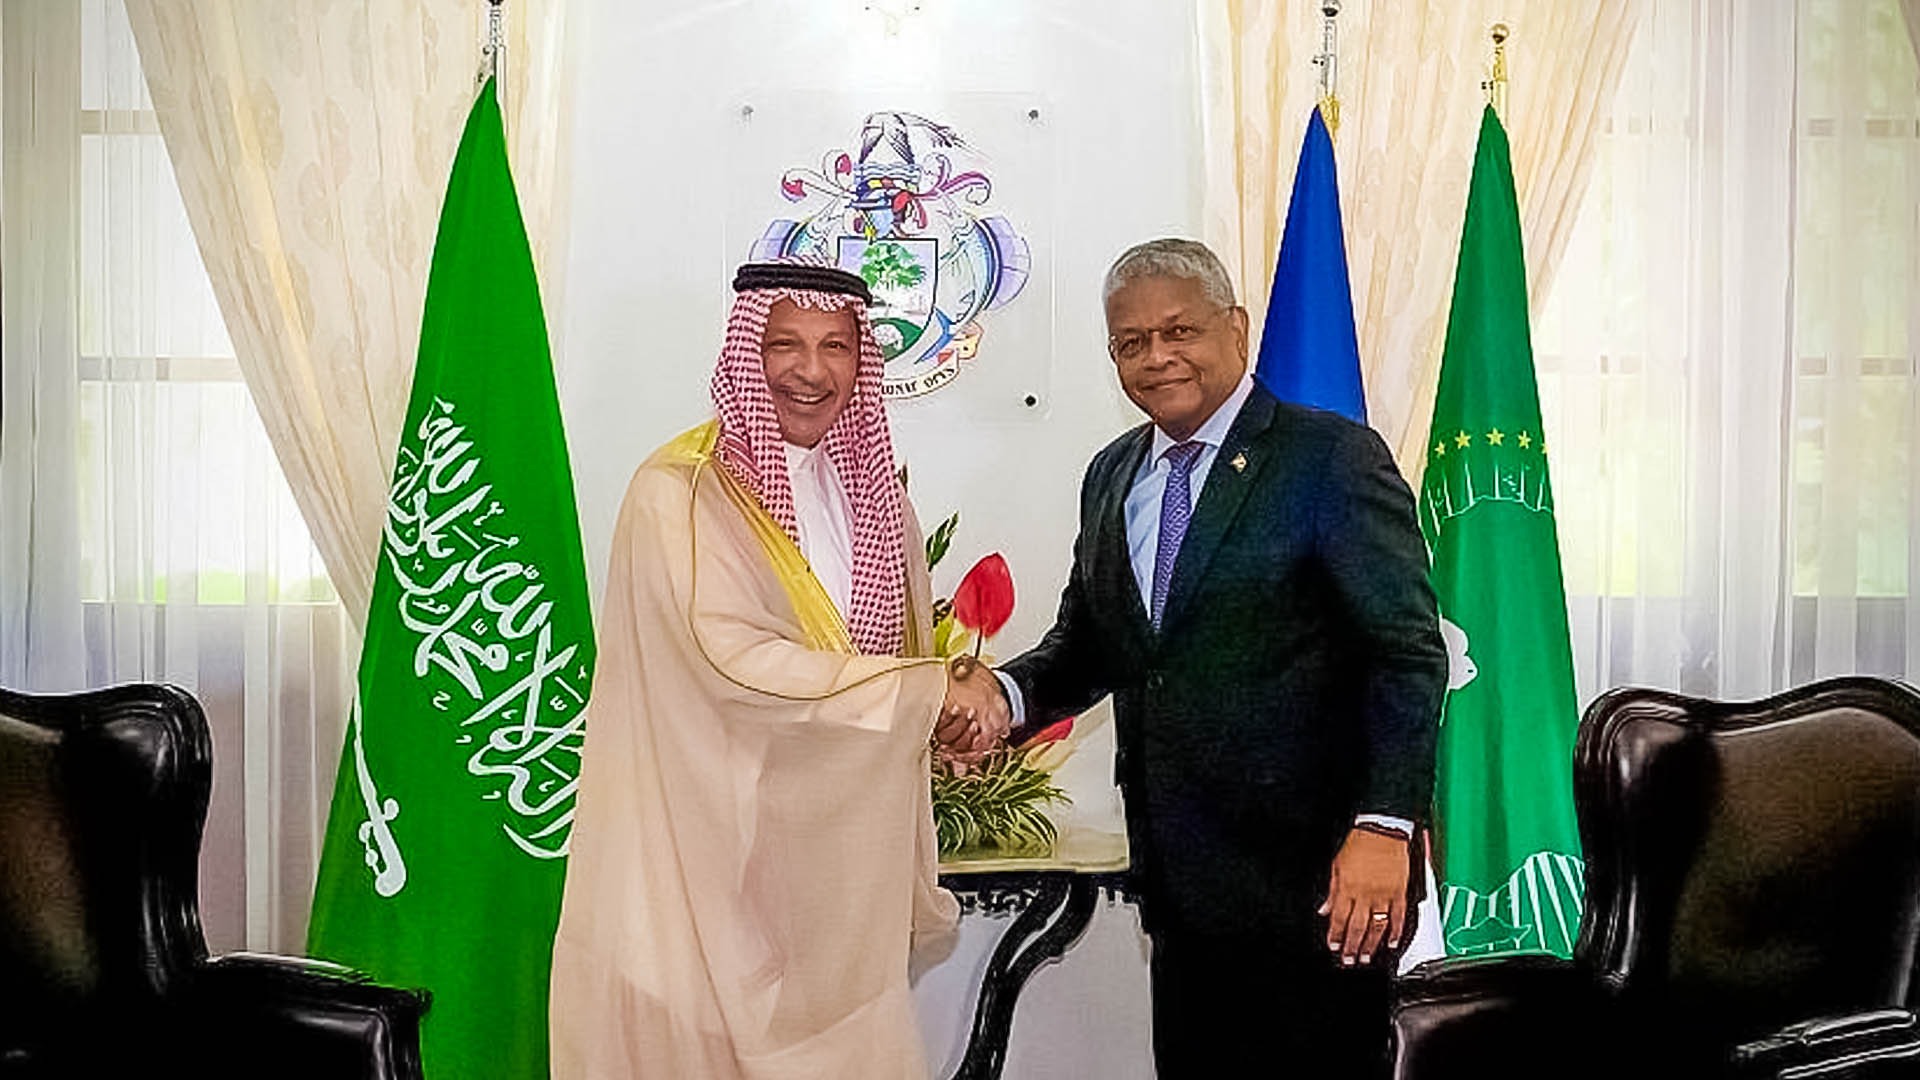 The President of Seychelles meets with Saudi Advisor Qattan